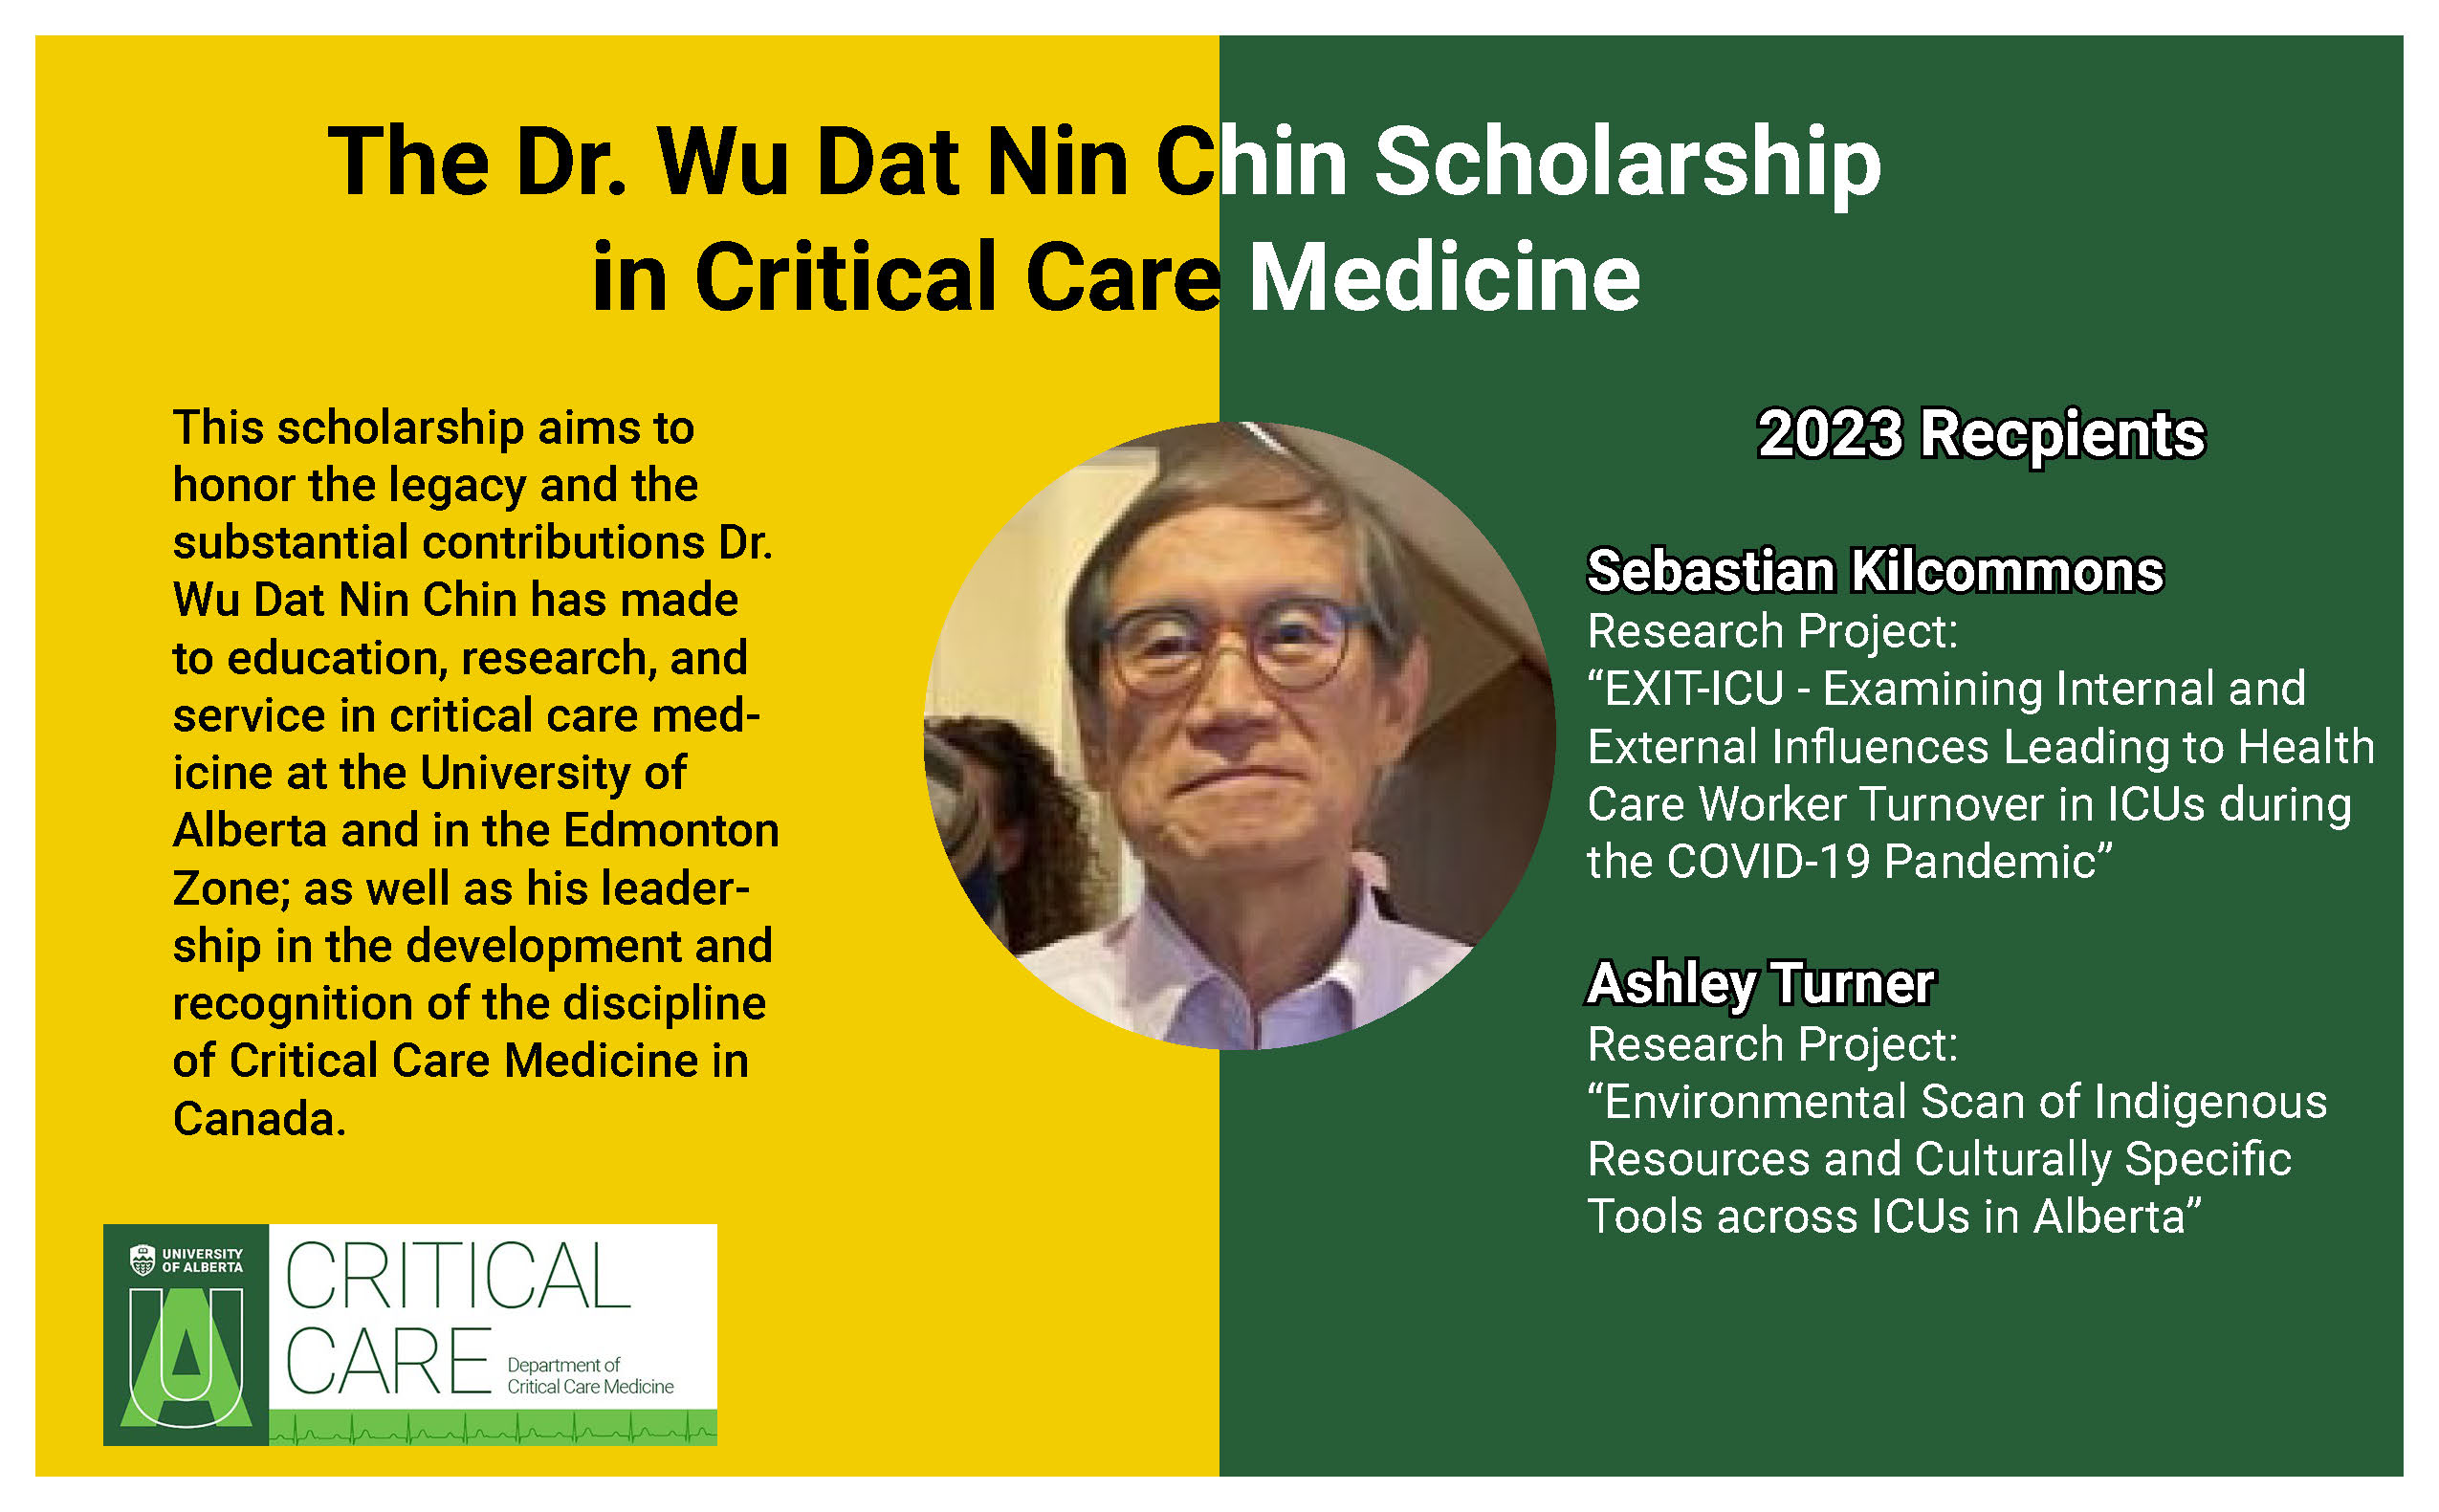 Dr. Wu Dat Nin Chin Scholarship in Critical Care Medicine Recipients Sebastian Kilcommons and Ashley Turner